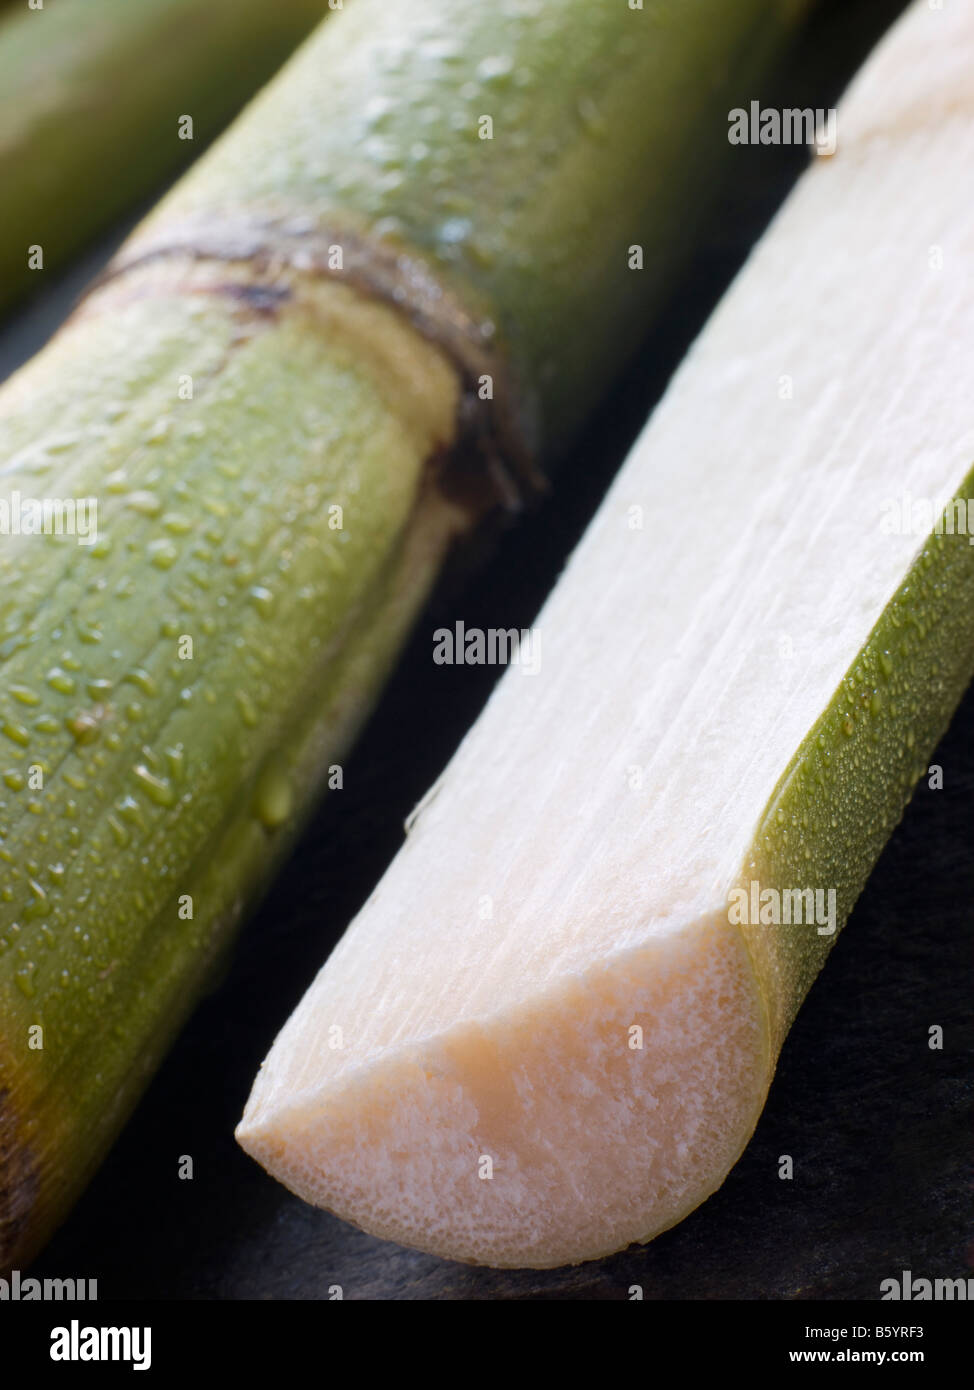 Рубщик сахарного тростника 8. Стебель сахарного тростника. Сахарный тростник. Сахарный тростник в разрезе. Стебель сахарного тростника в разрезе.